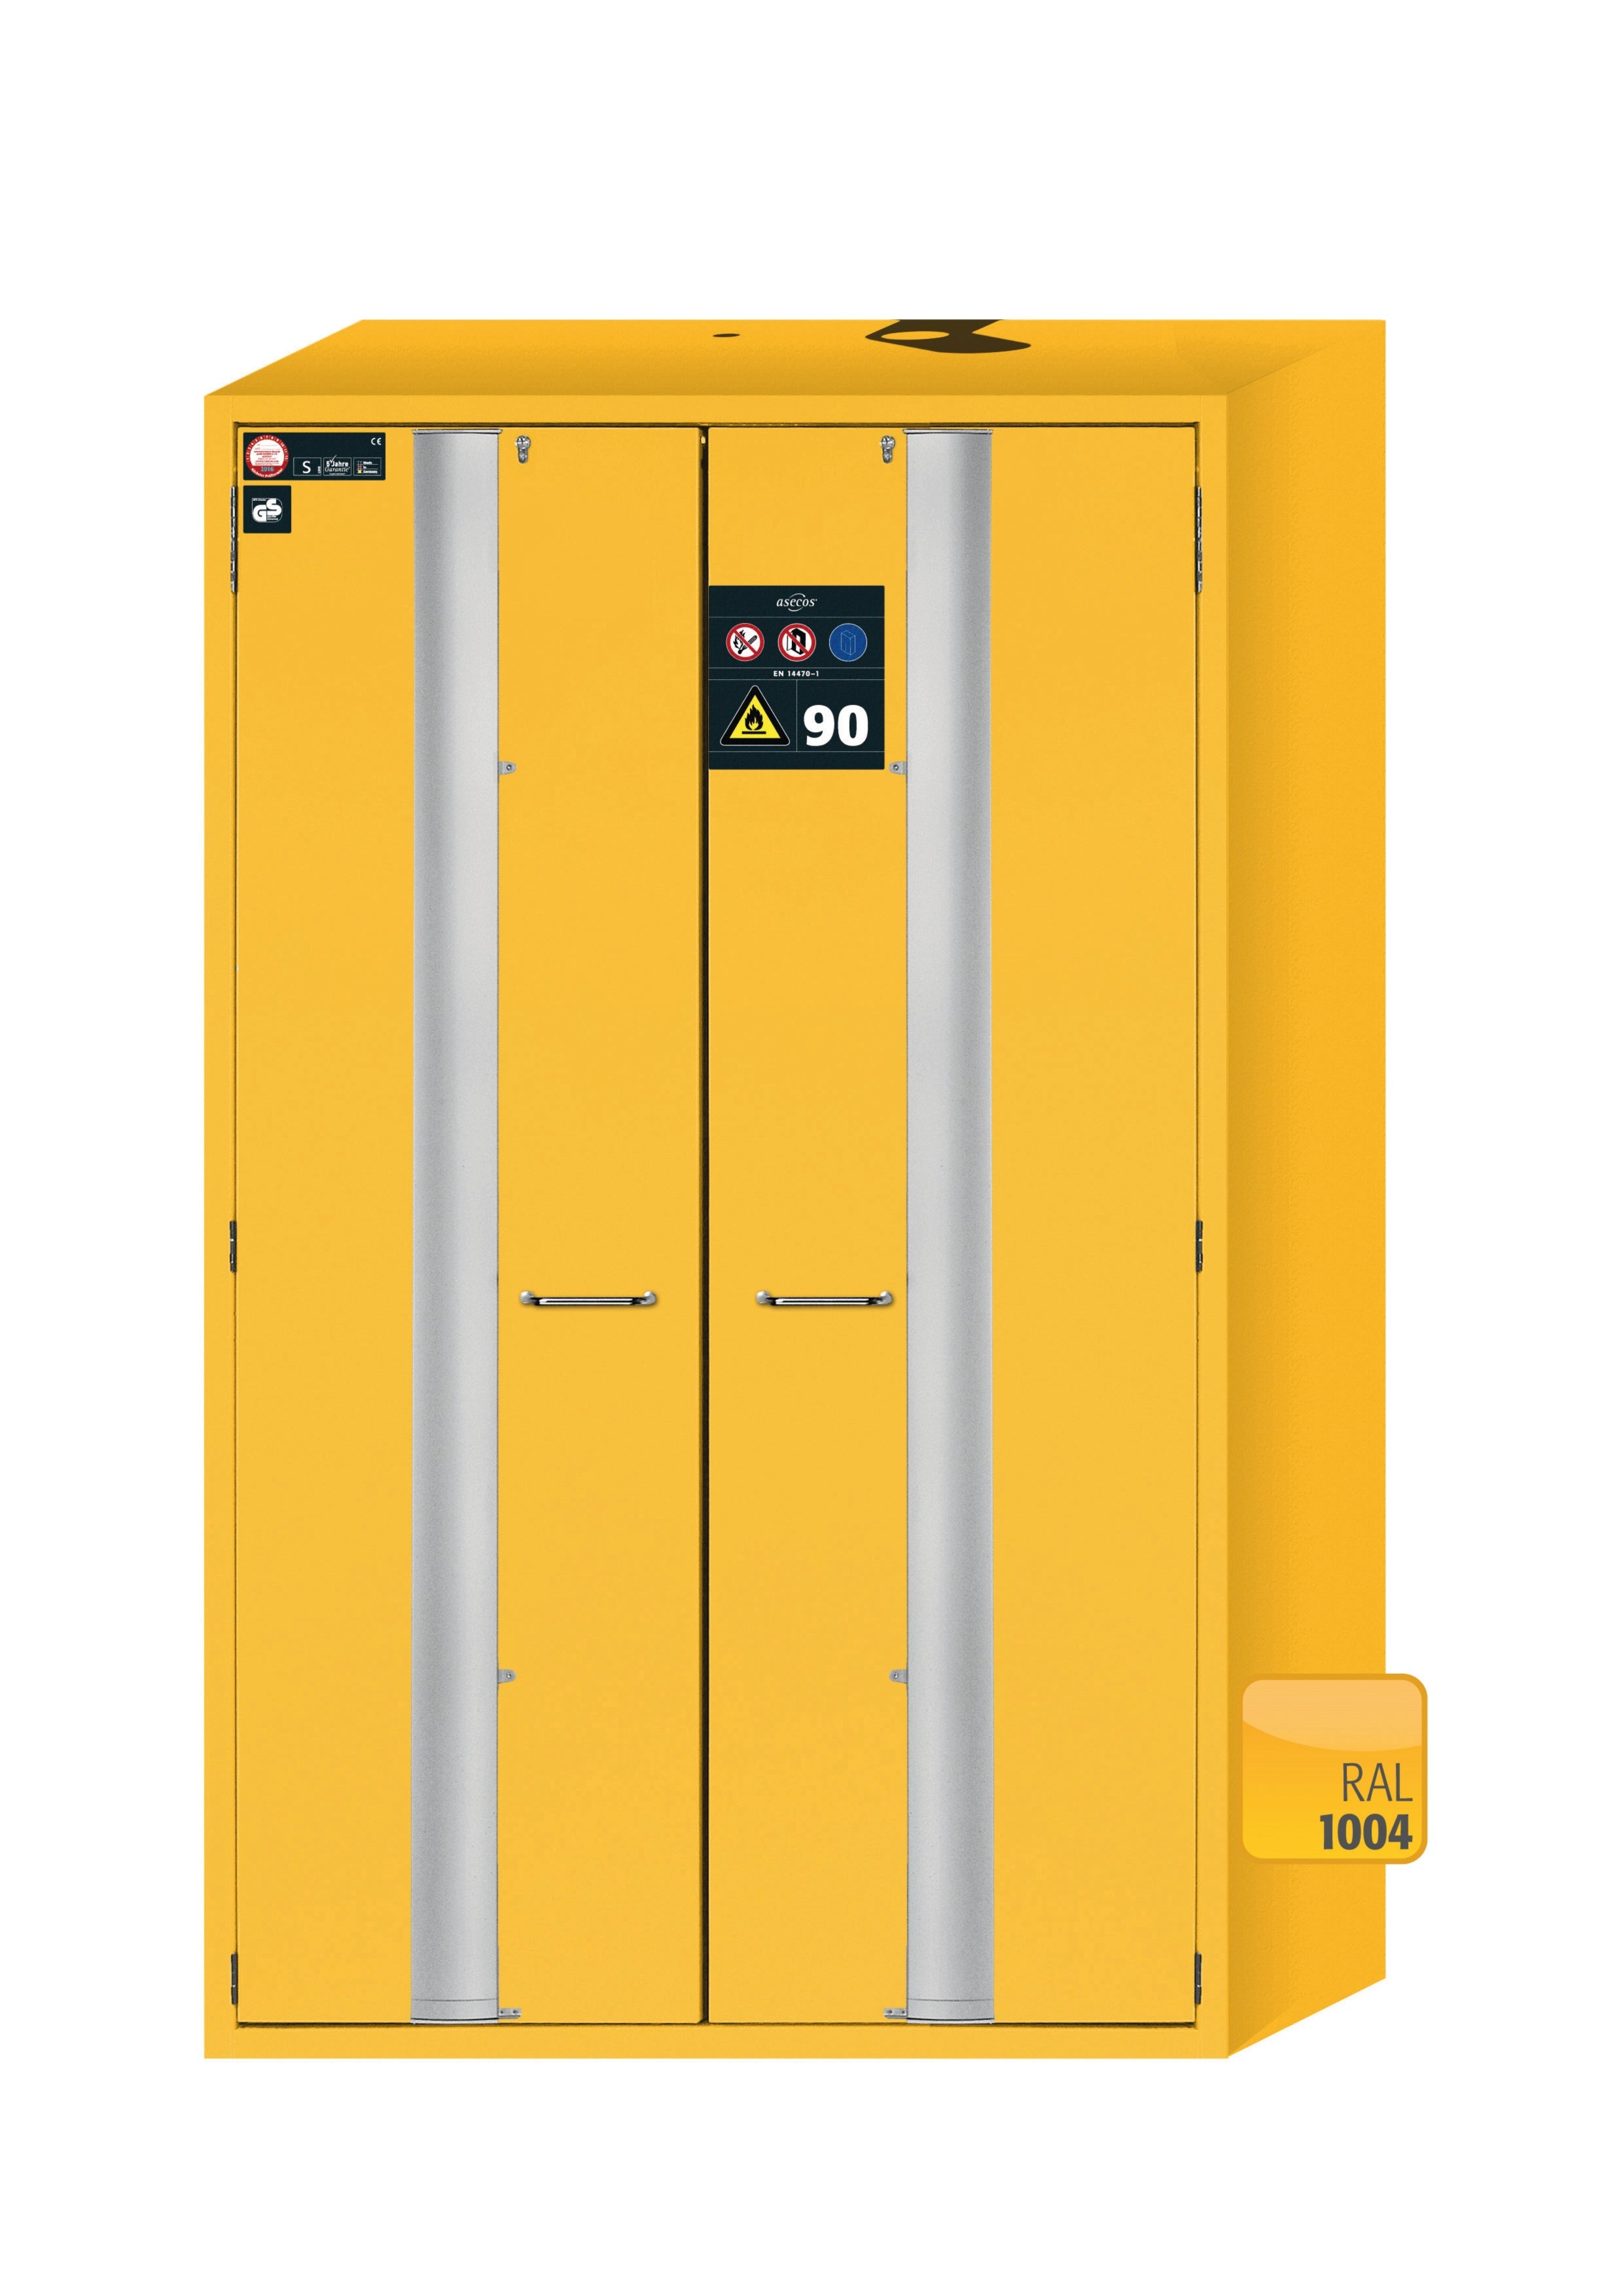 Type 90 safety storage cabinet S-PHOENIX-90 model S90.196.120.FDAS in warning yellow RAL 1004 with 2x tray shelf (standard) (polypropylene),